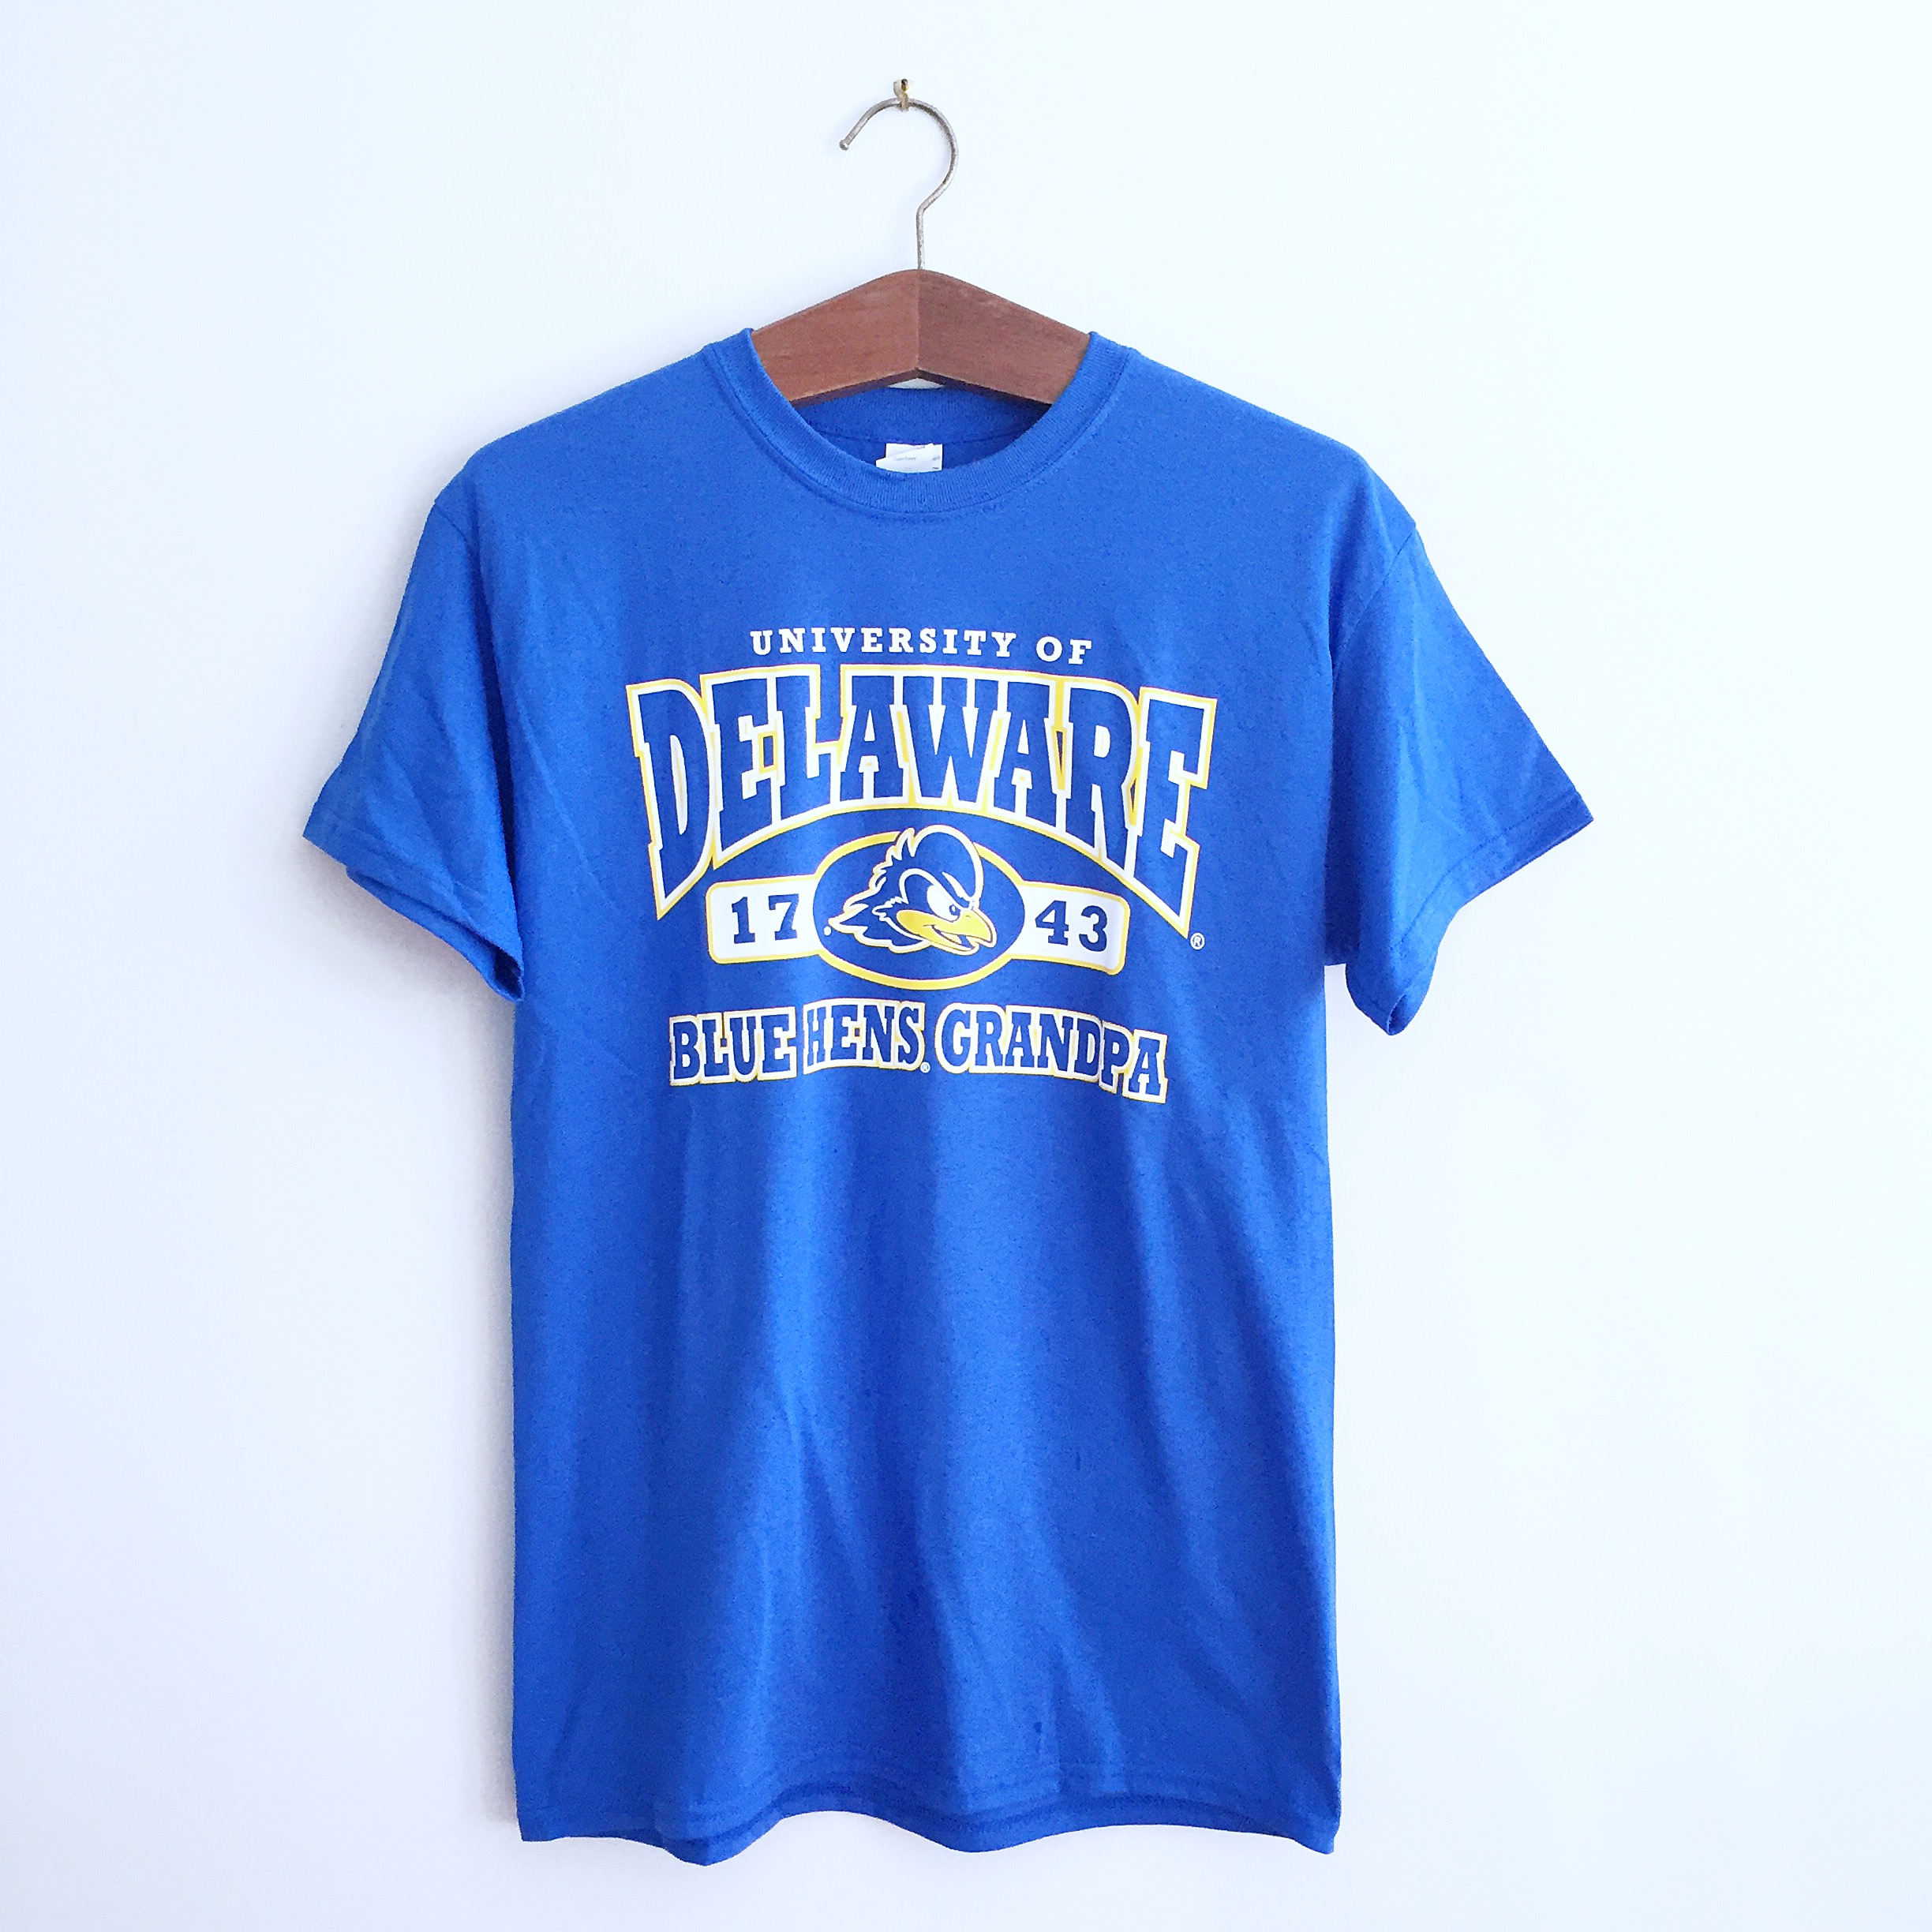 https://www.national5and10.com/wp-content/uploads/2017/05/University-of-Delaware-Grandpa-T-shirt-Royal-1.jpg